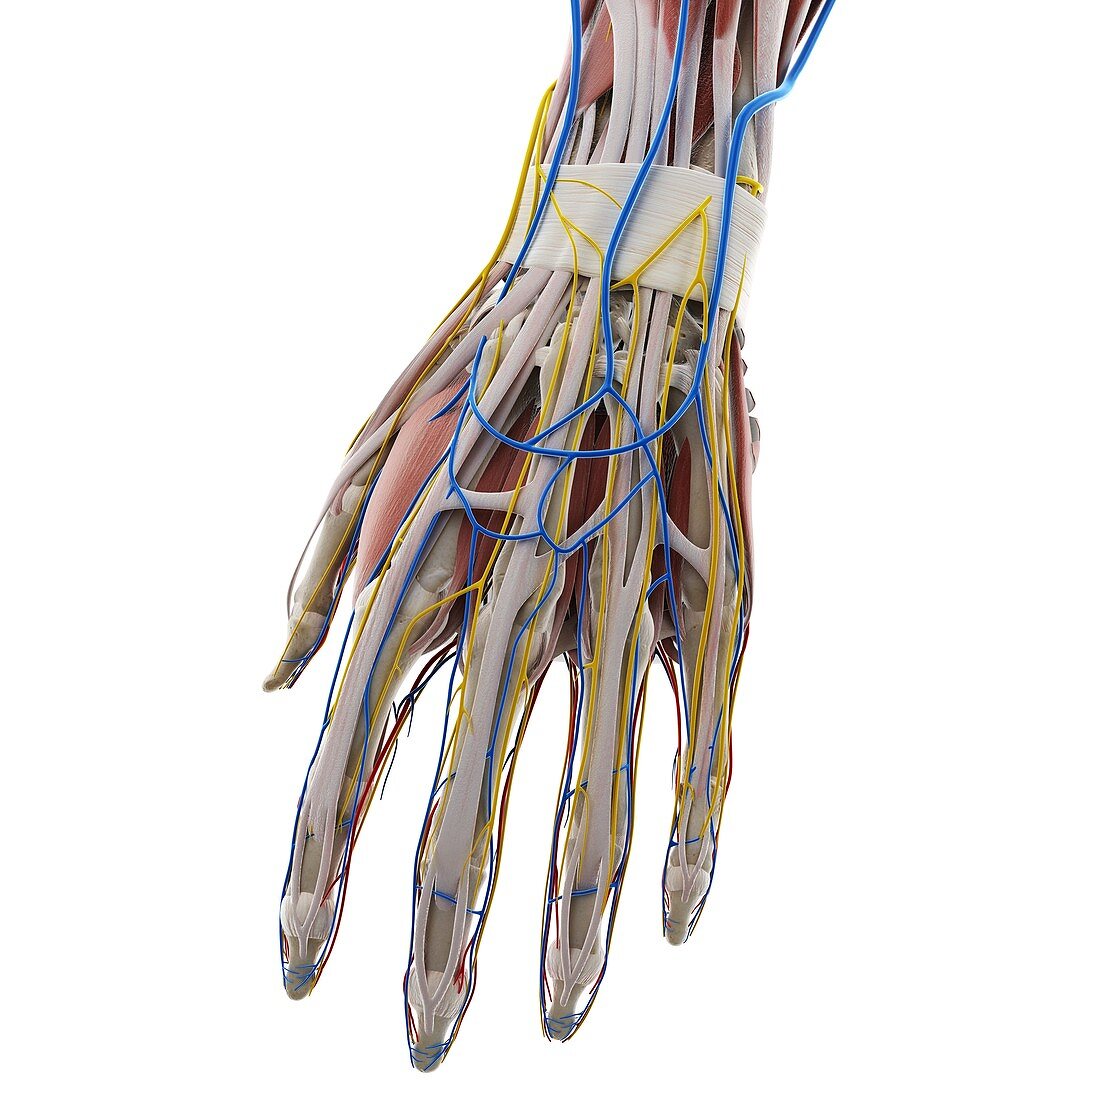 Anatomy of the hand, illustration